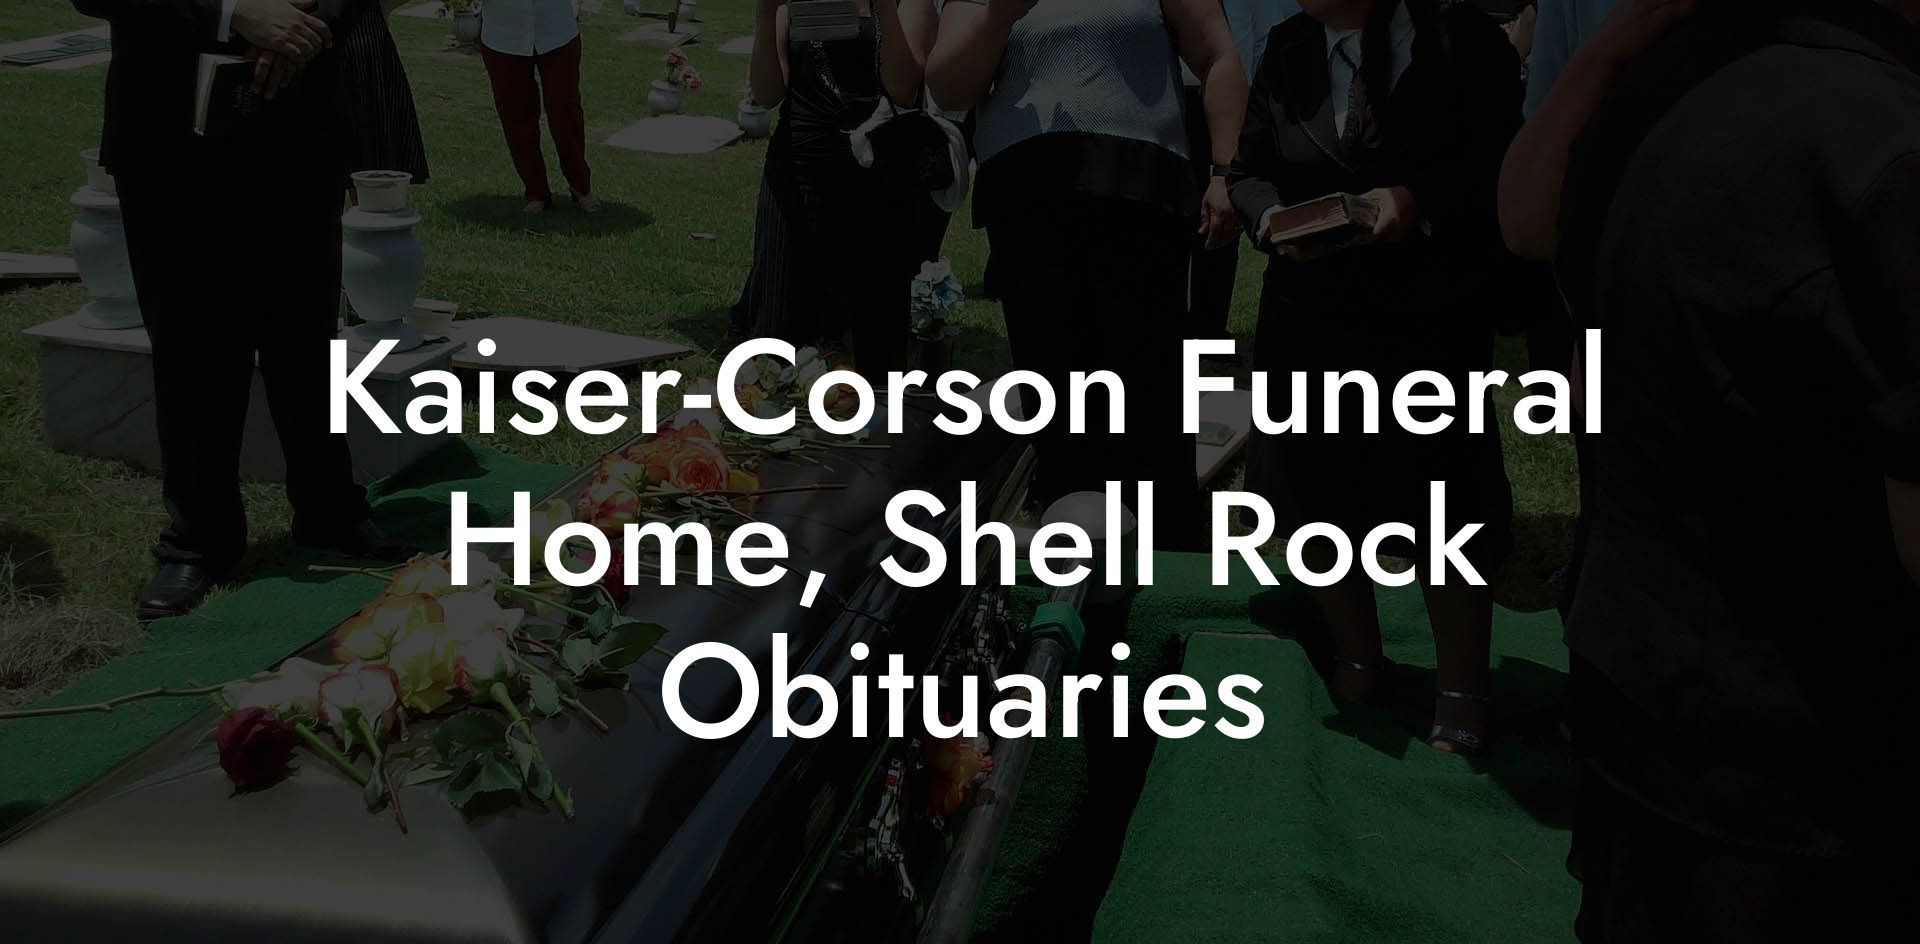 Kaiser-Corson Funeral Home, Shell Rock Obituaries